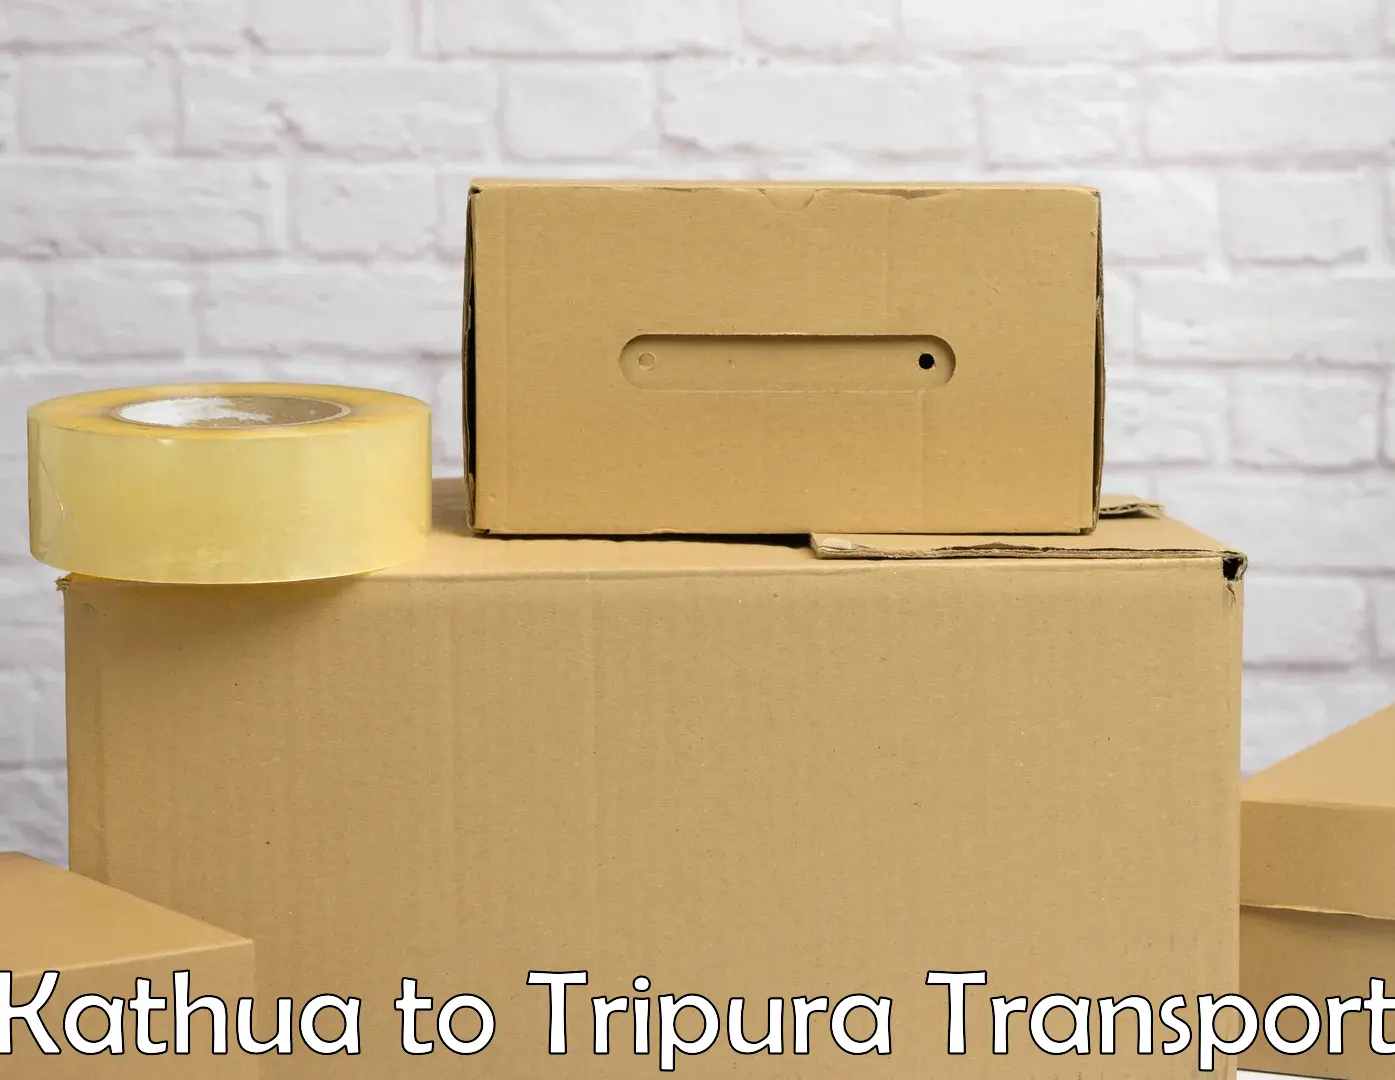 Furniture transport service Kathua to Udaipur Tripura